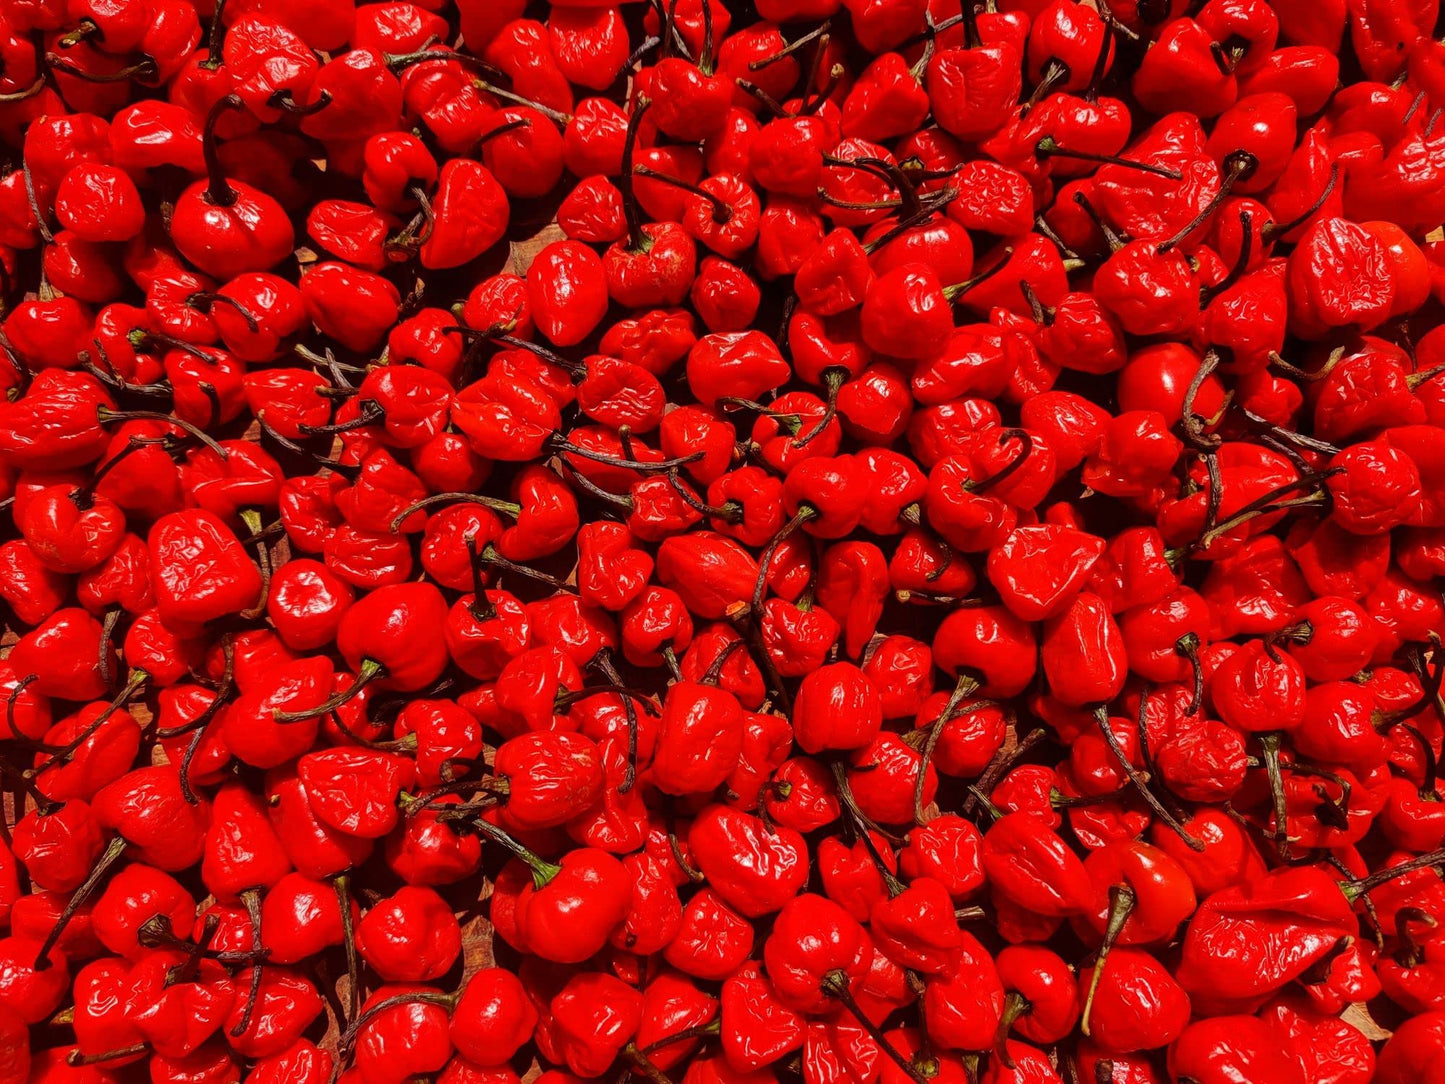 Chilli Plants - 'Scotch Bonnet Red' - 1 x Full Plant in a 9cm Pot